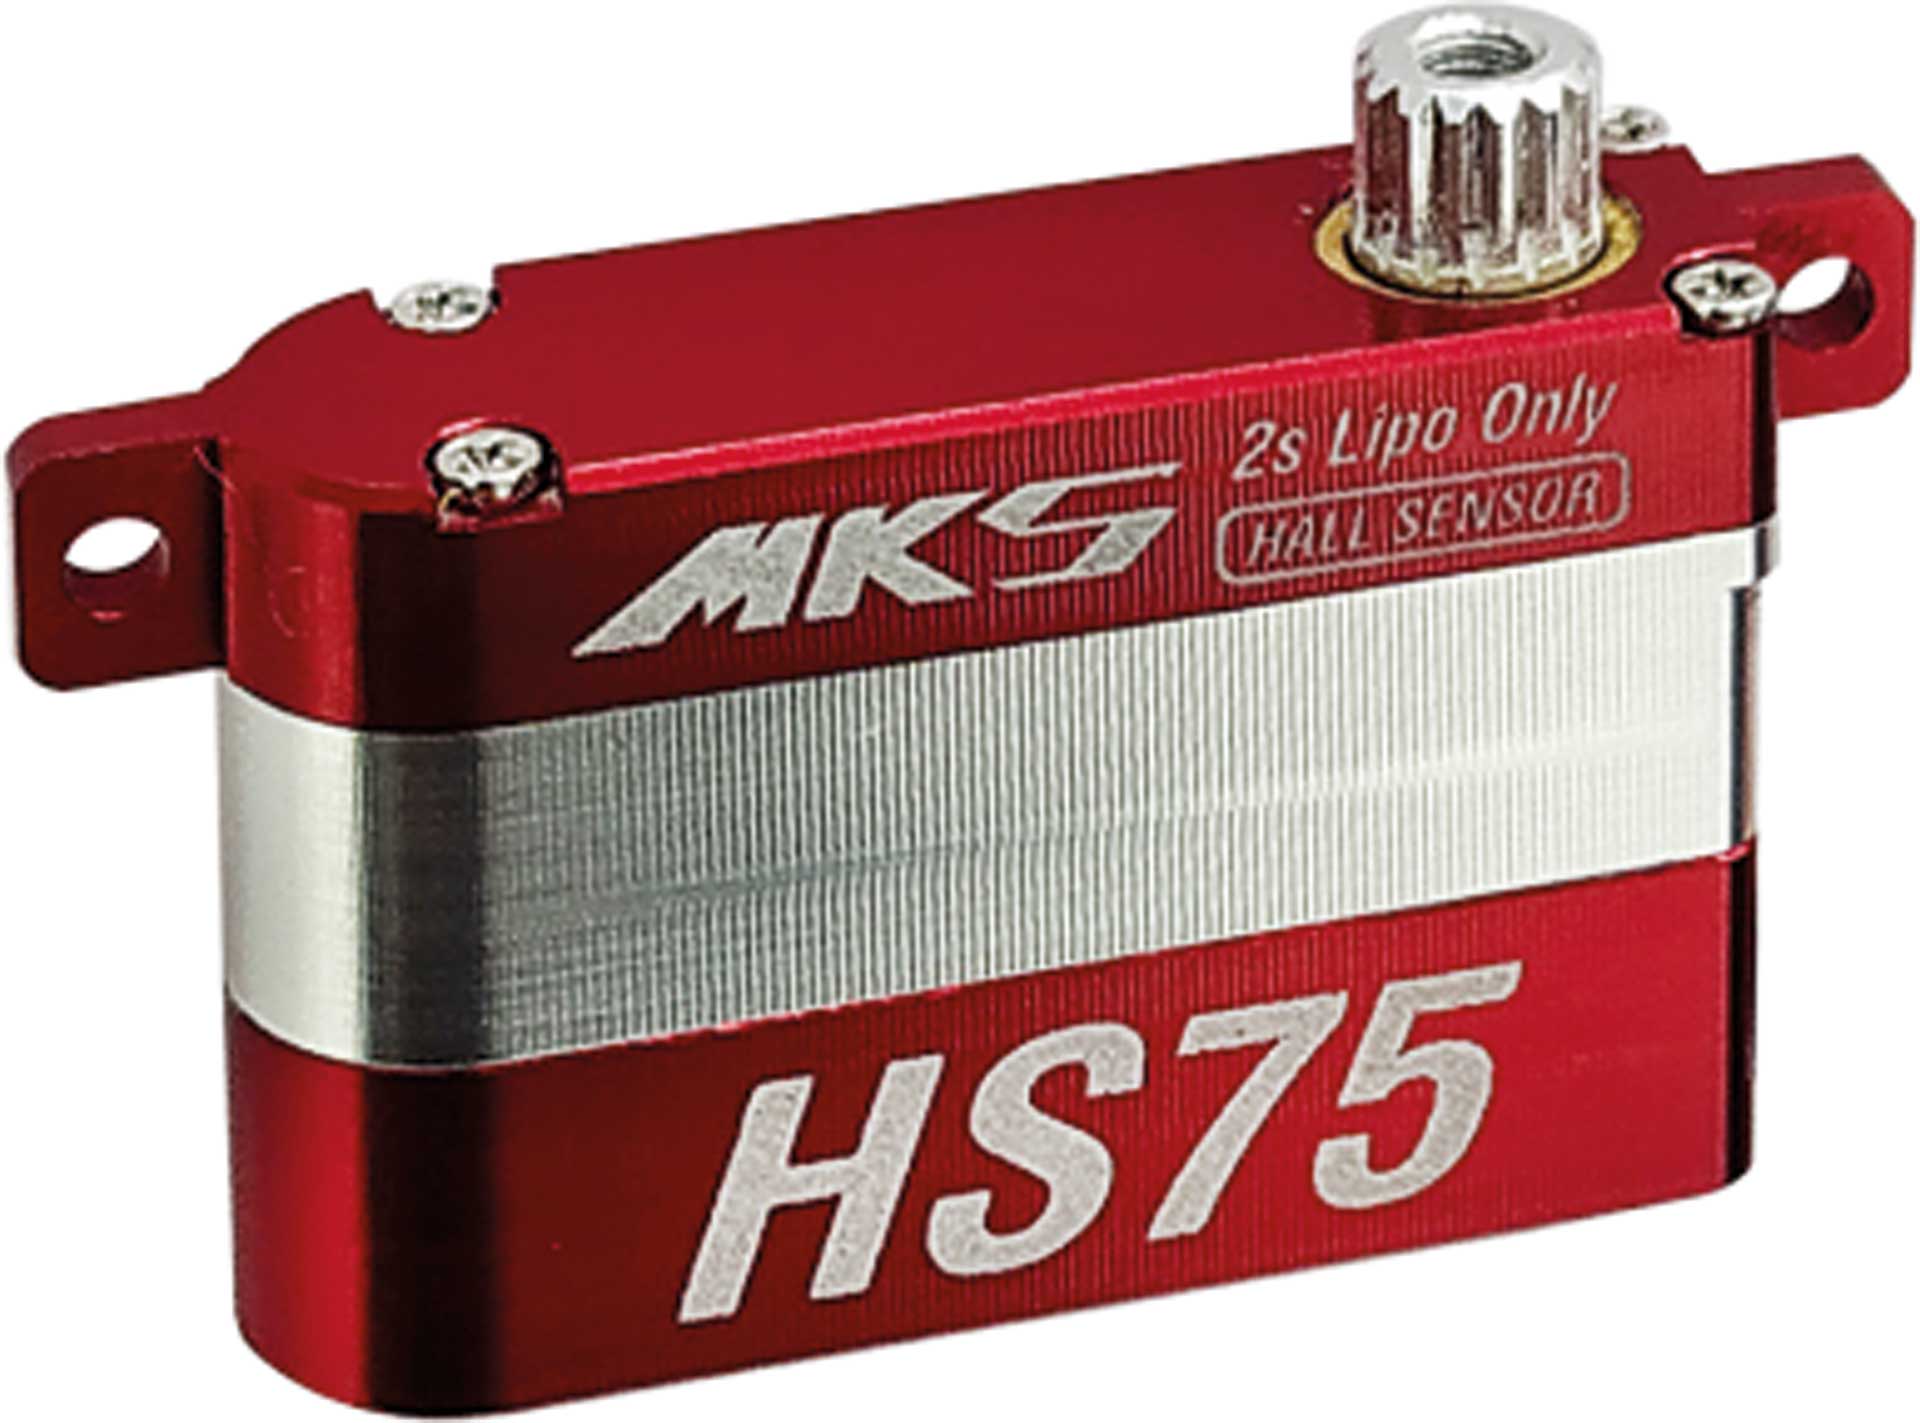 MKS HS75 Digital Servo mit Hall Sensoren F3K/F5K/F5J.....